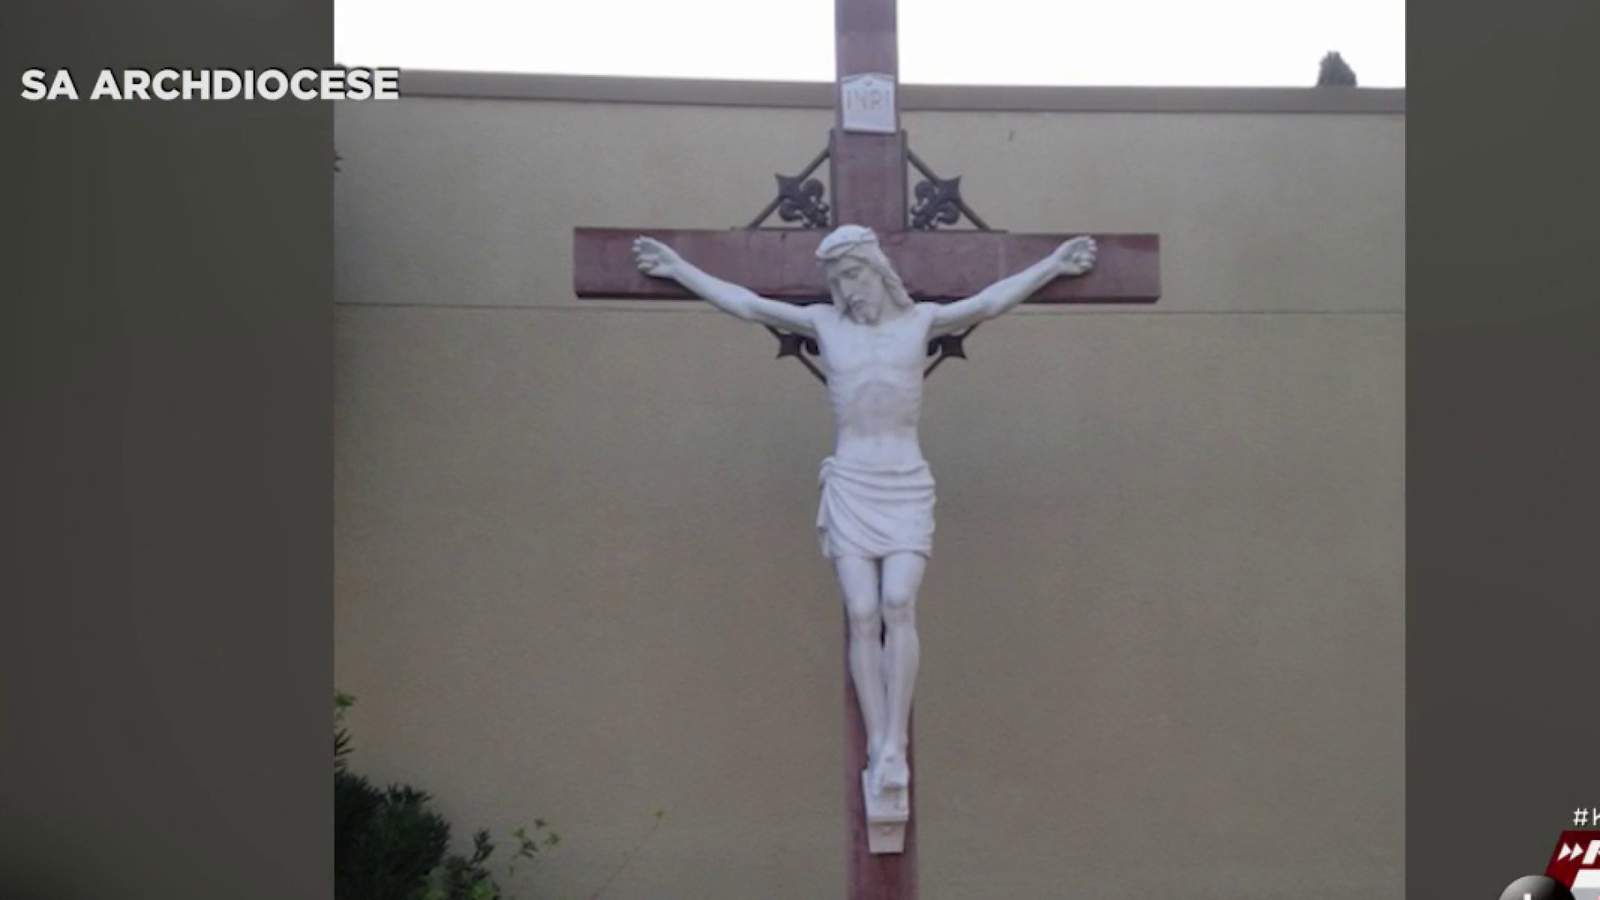 Building, crucifix vandalized at San Antonio Archdiocese Assumption Seminary